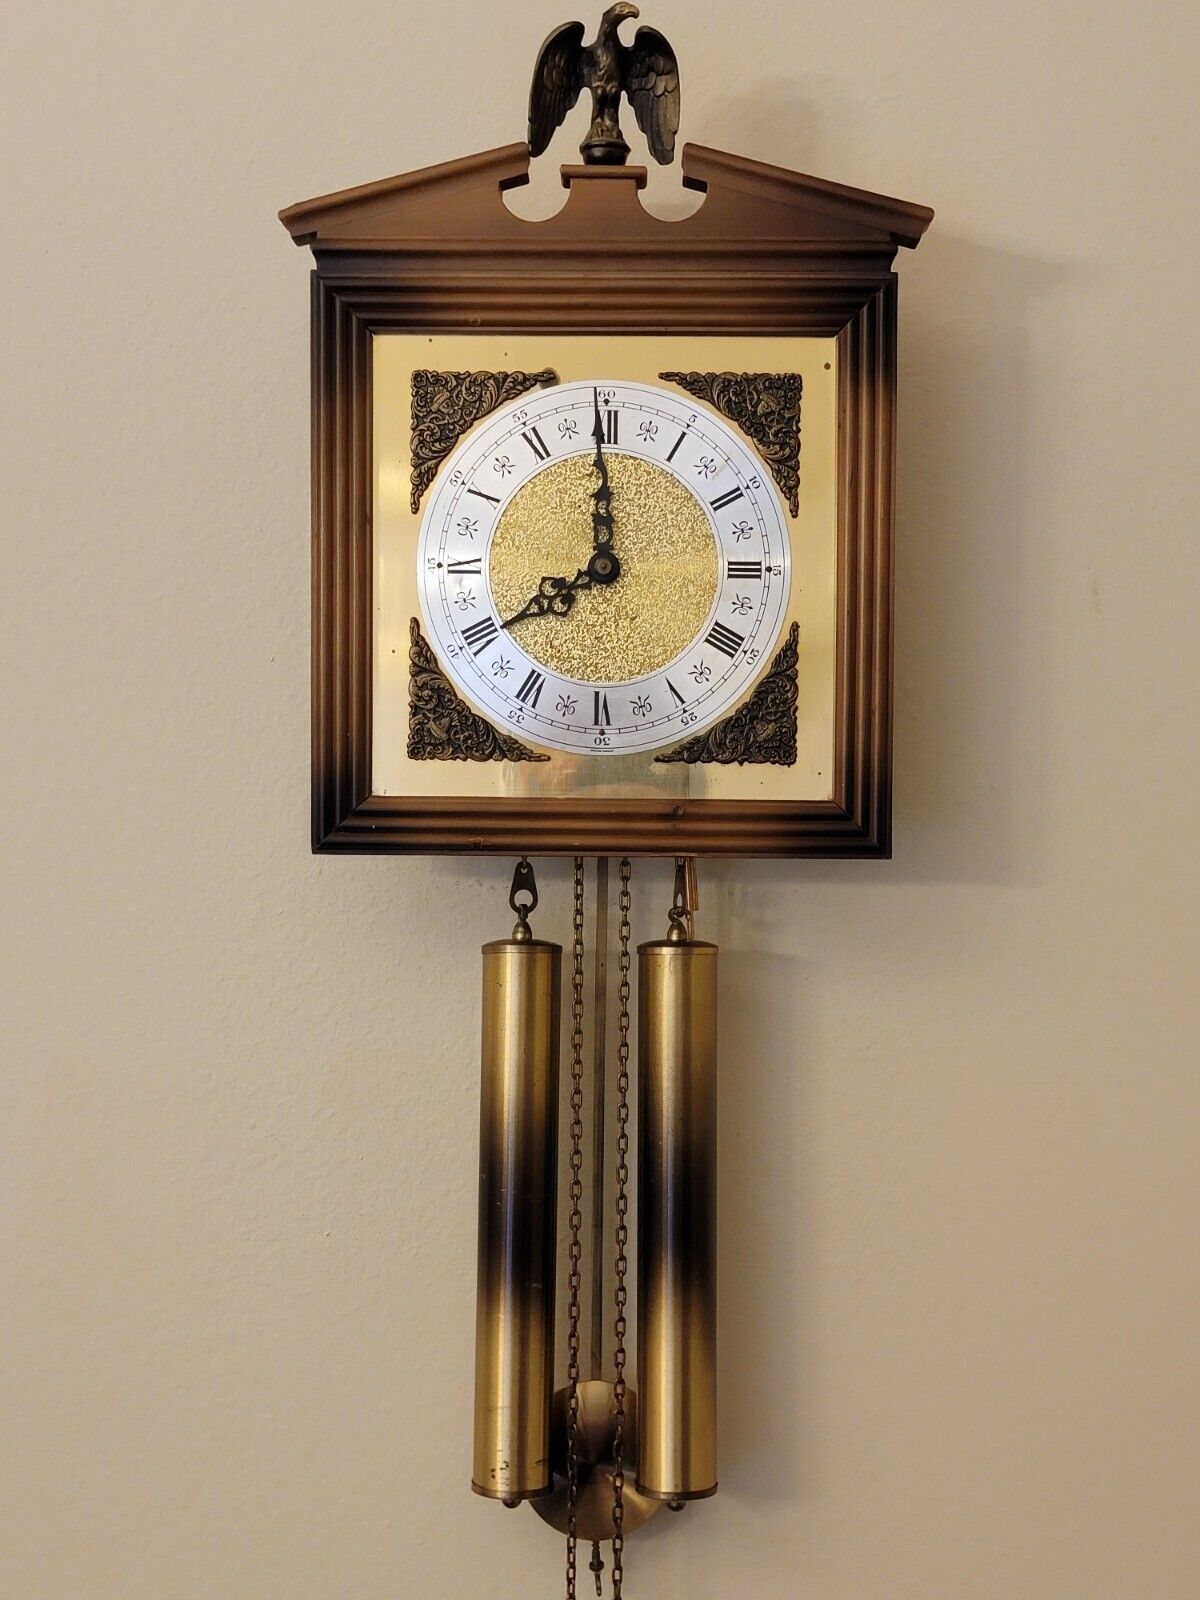 Beautiful German E schmeckenbecher h65 Wall Clock , Excellent Working Condition